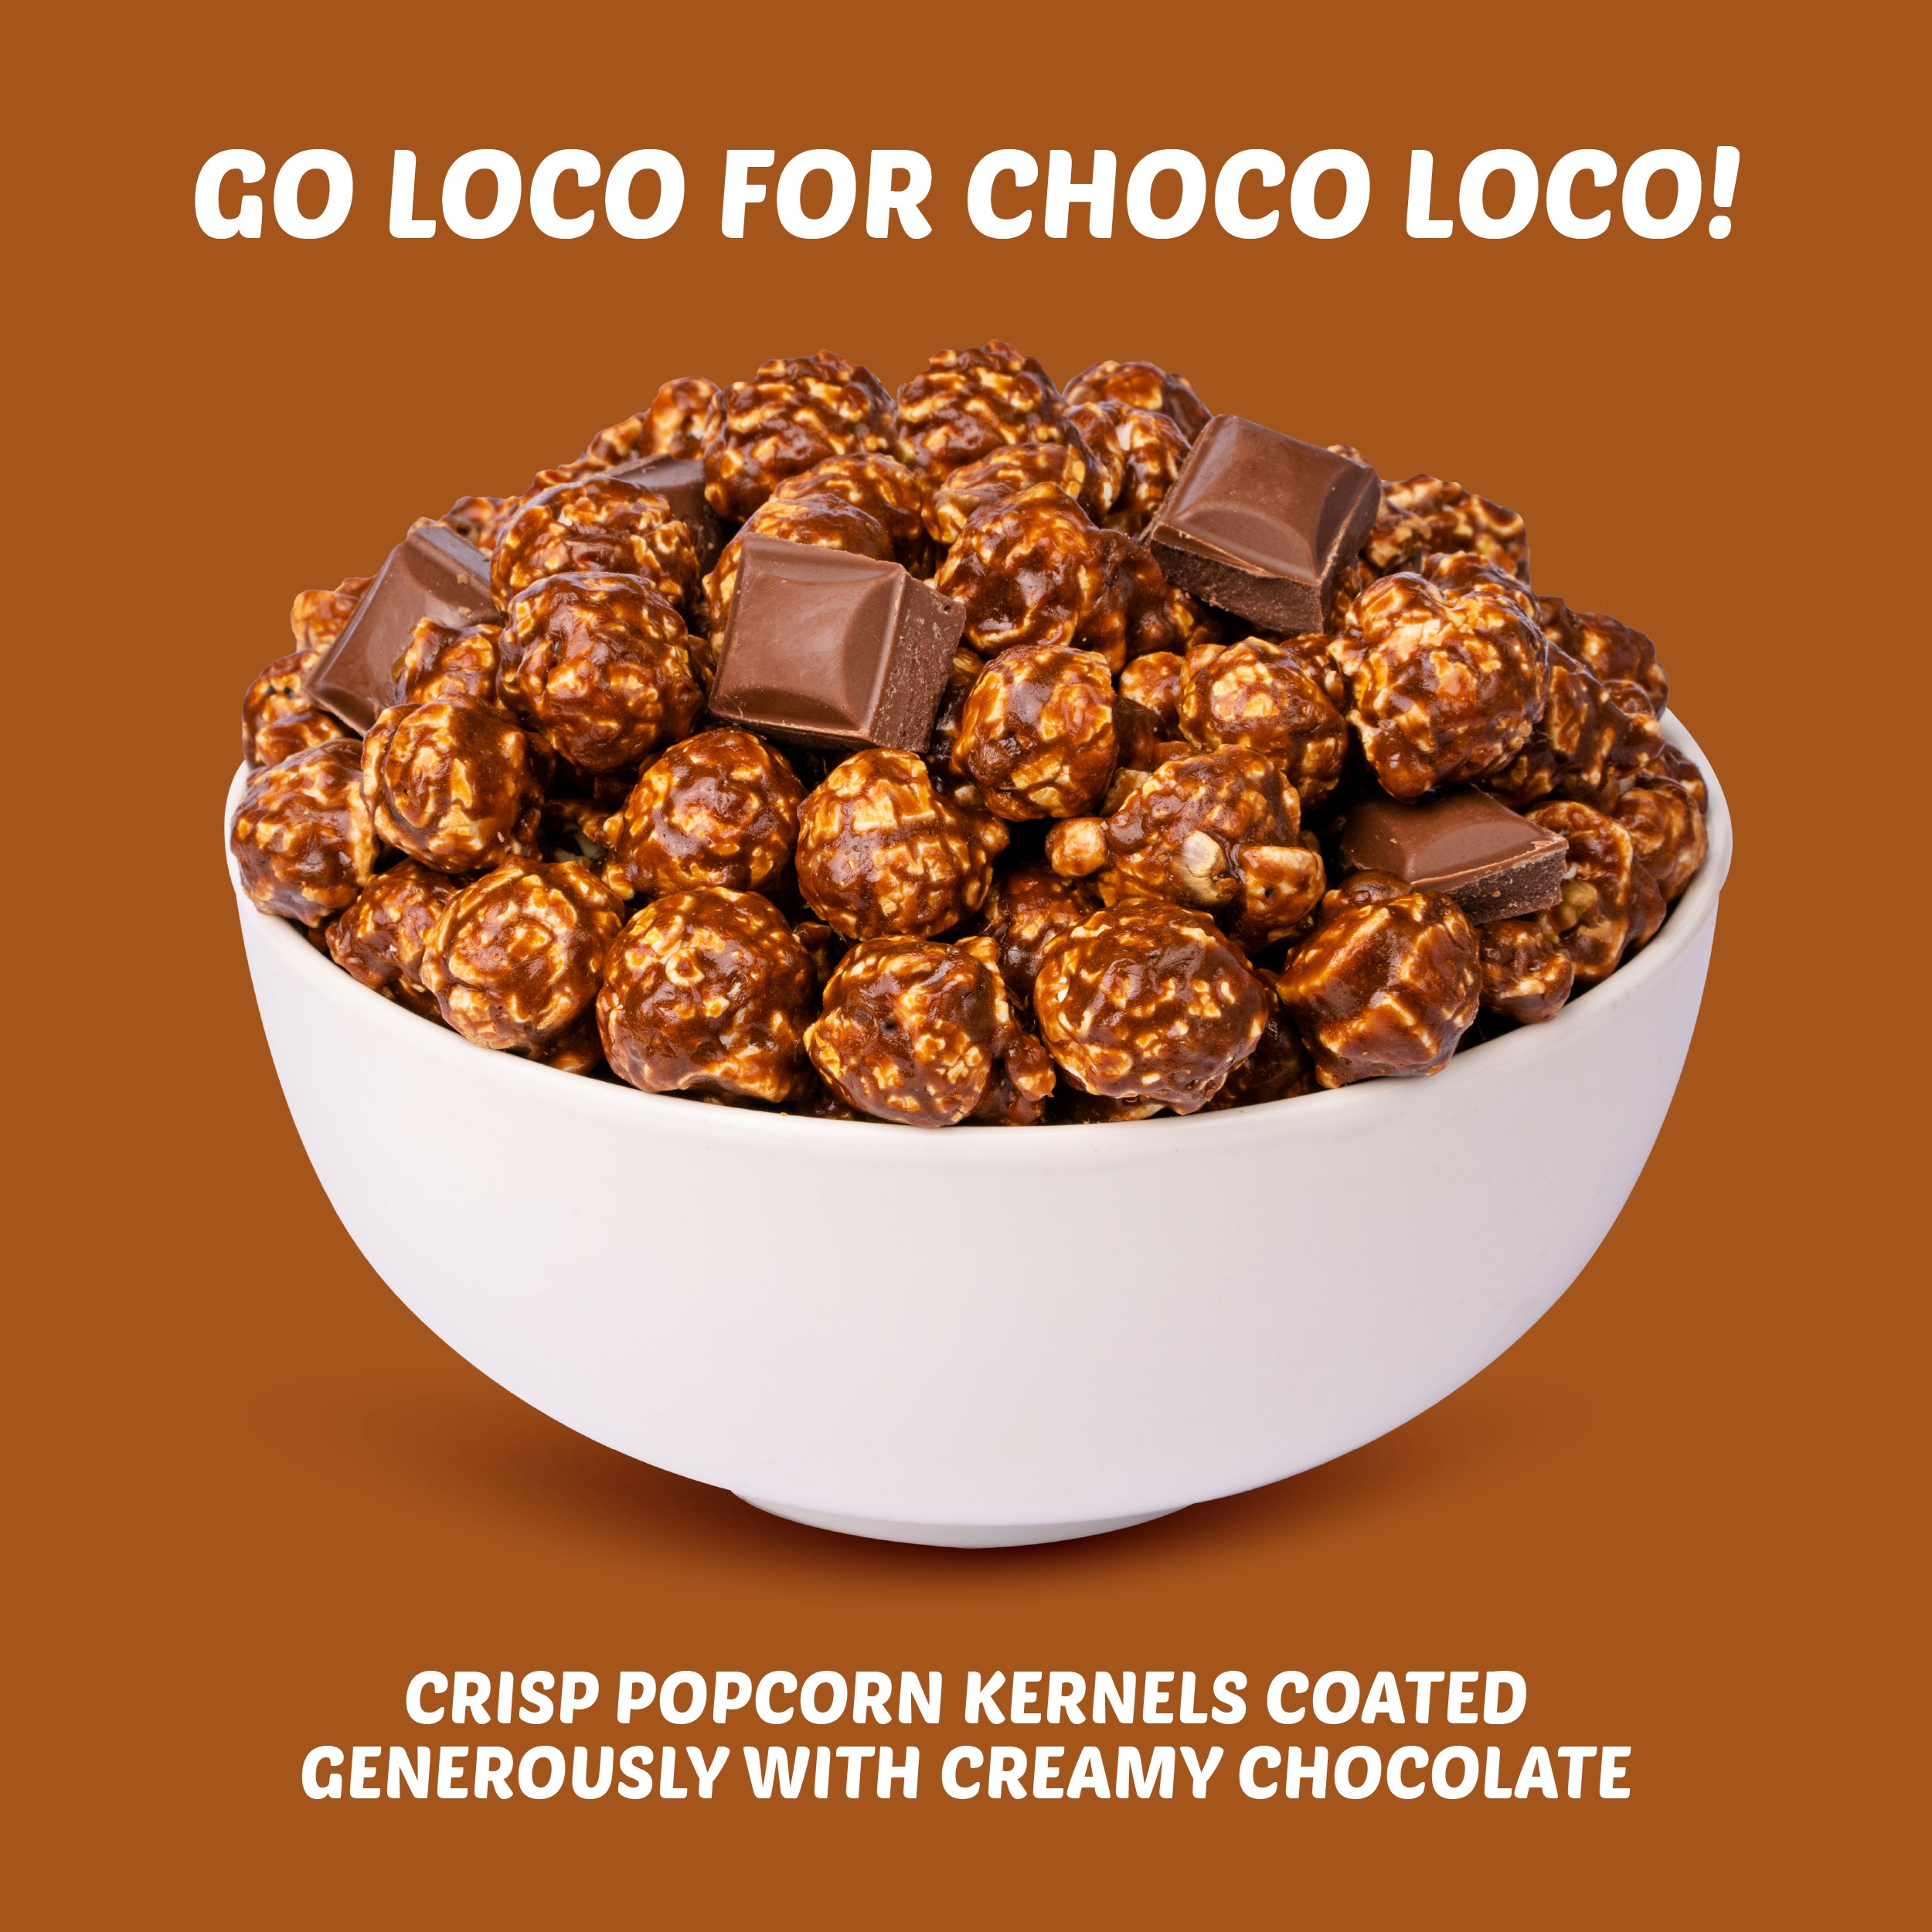 Choco Loco (Chocolate) Popcorn